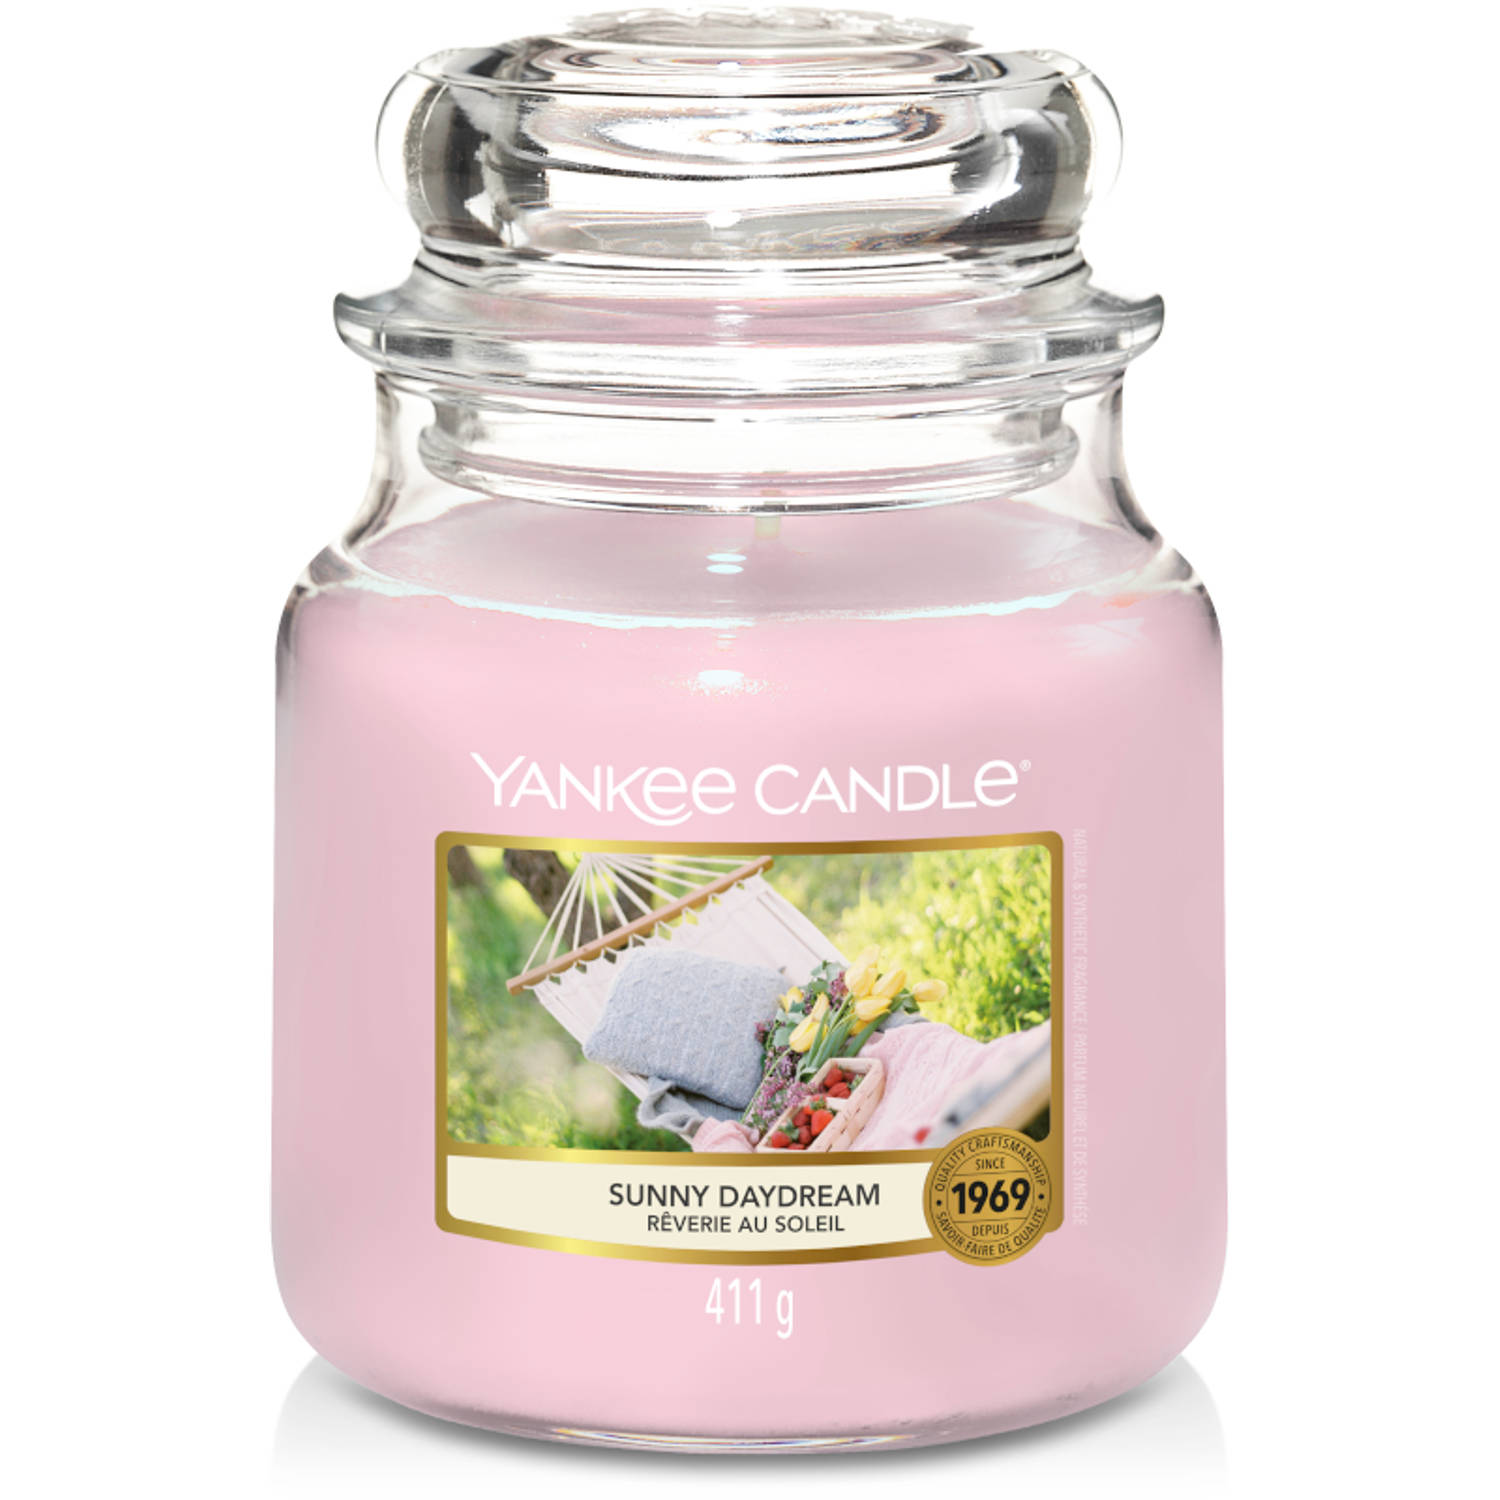 Yankee Candle Medium Pink Sands - 13 cm / ø 11 cm